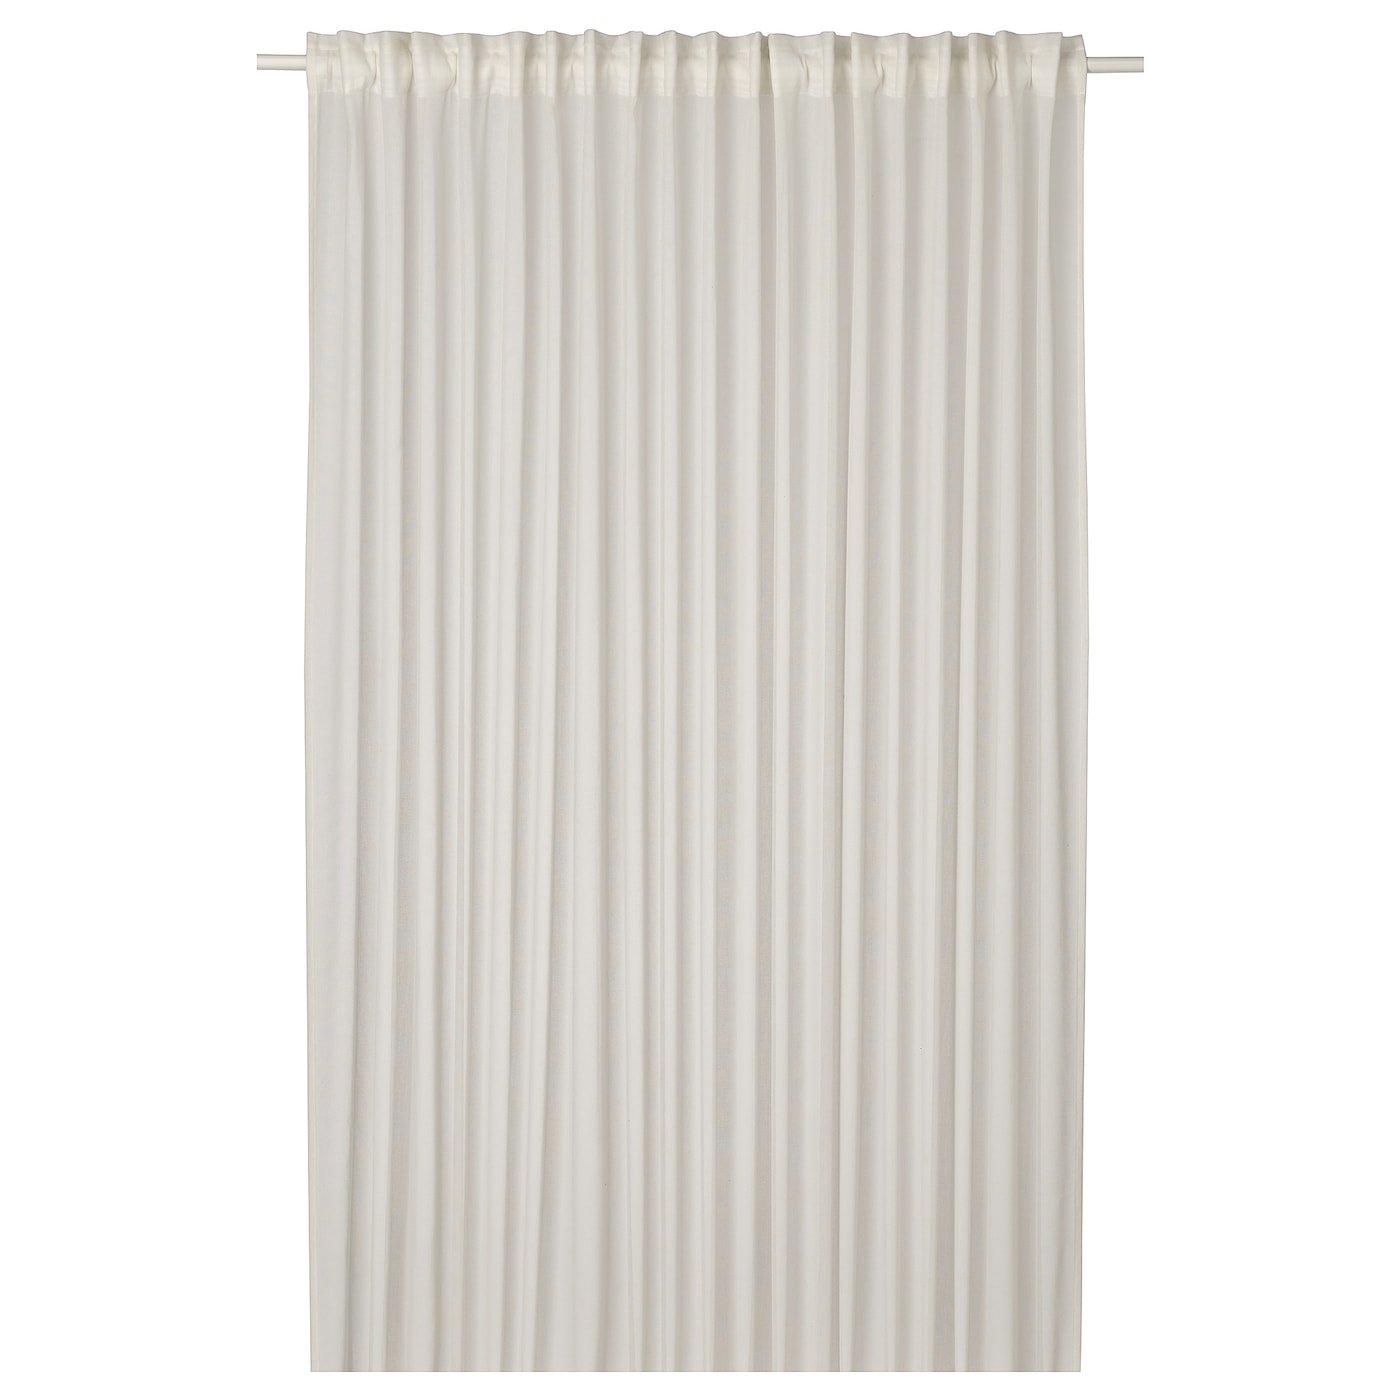 ÄNGSFRYLE sheer curtain, 1 piece white - IKEA